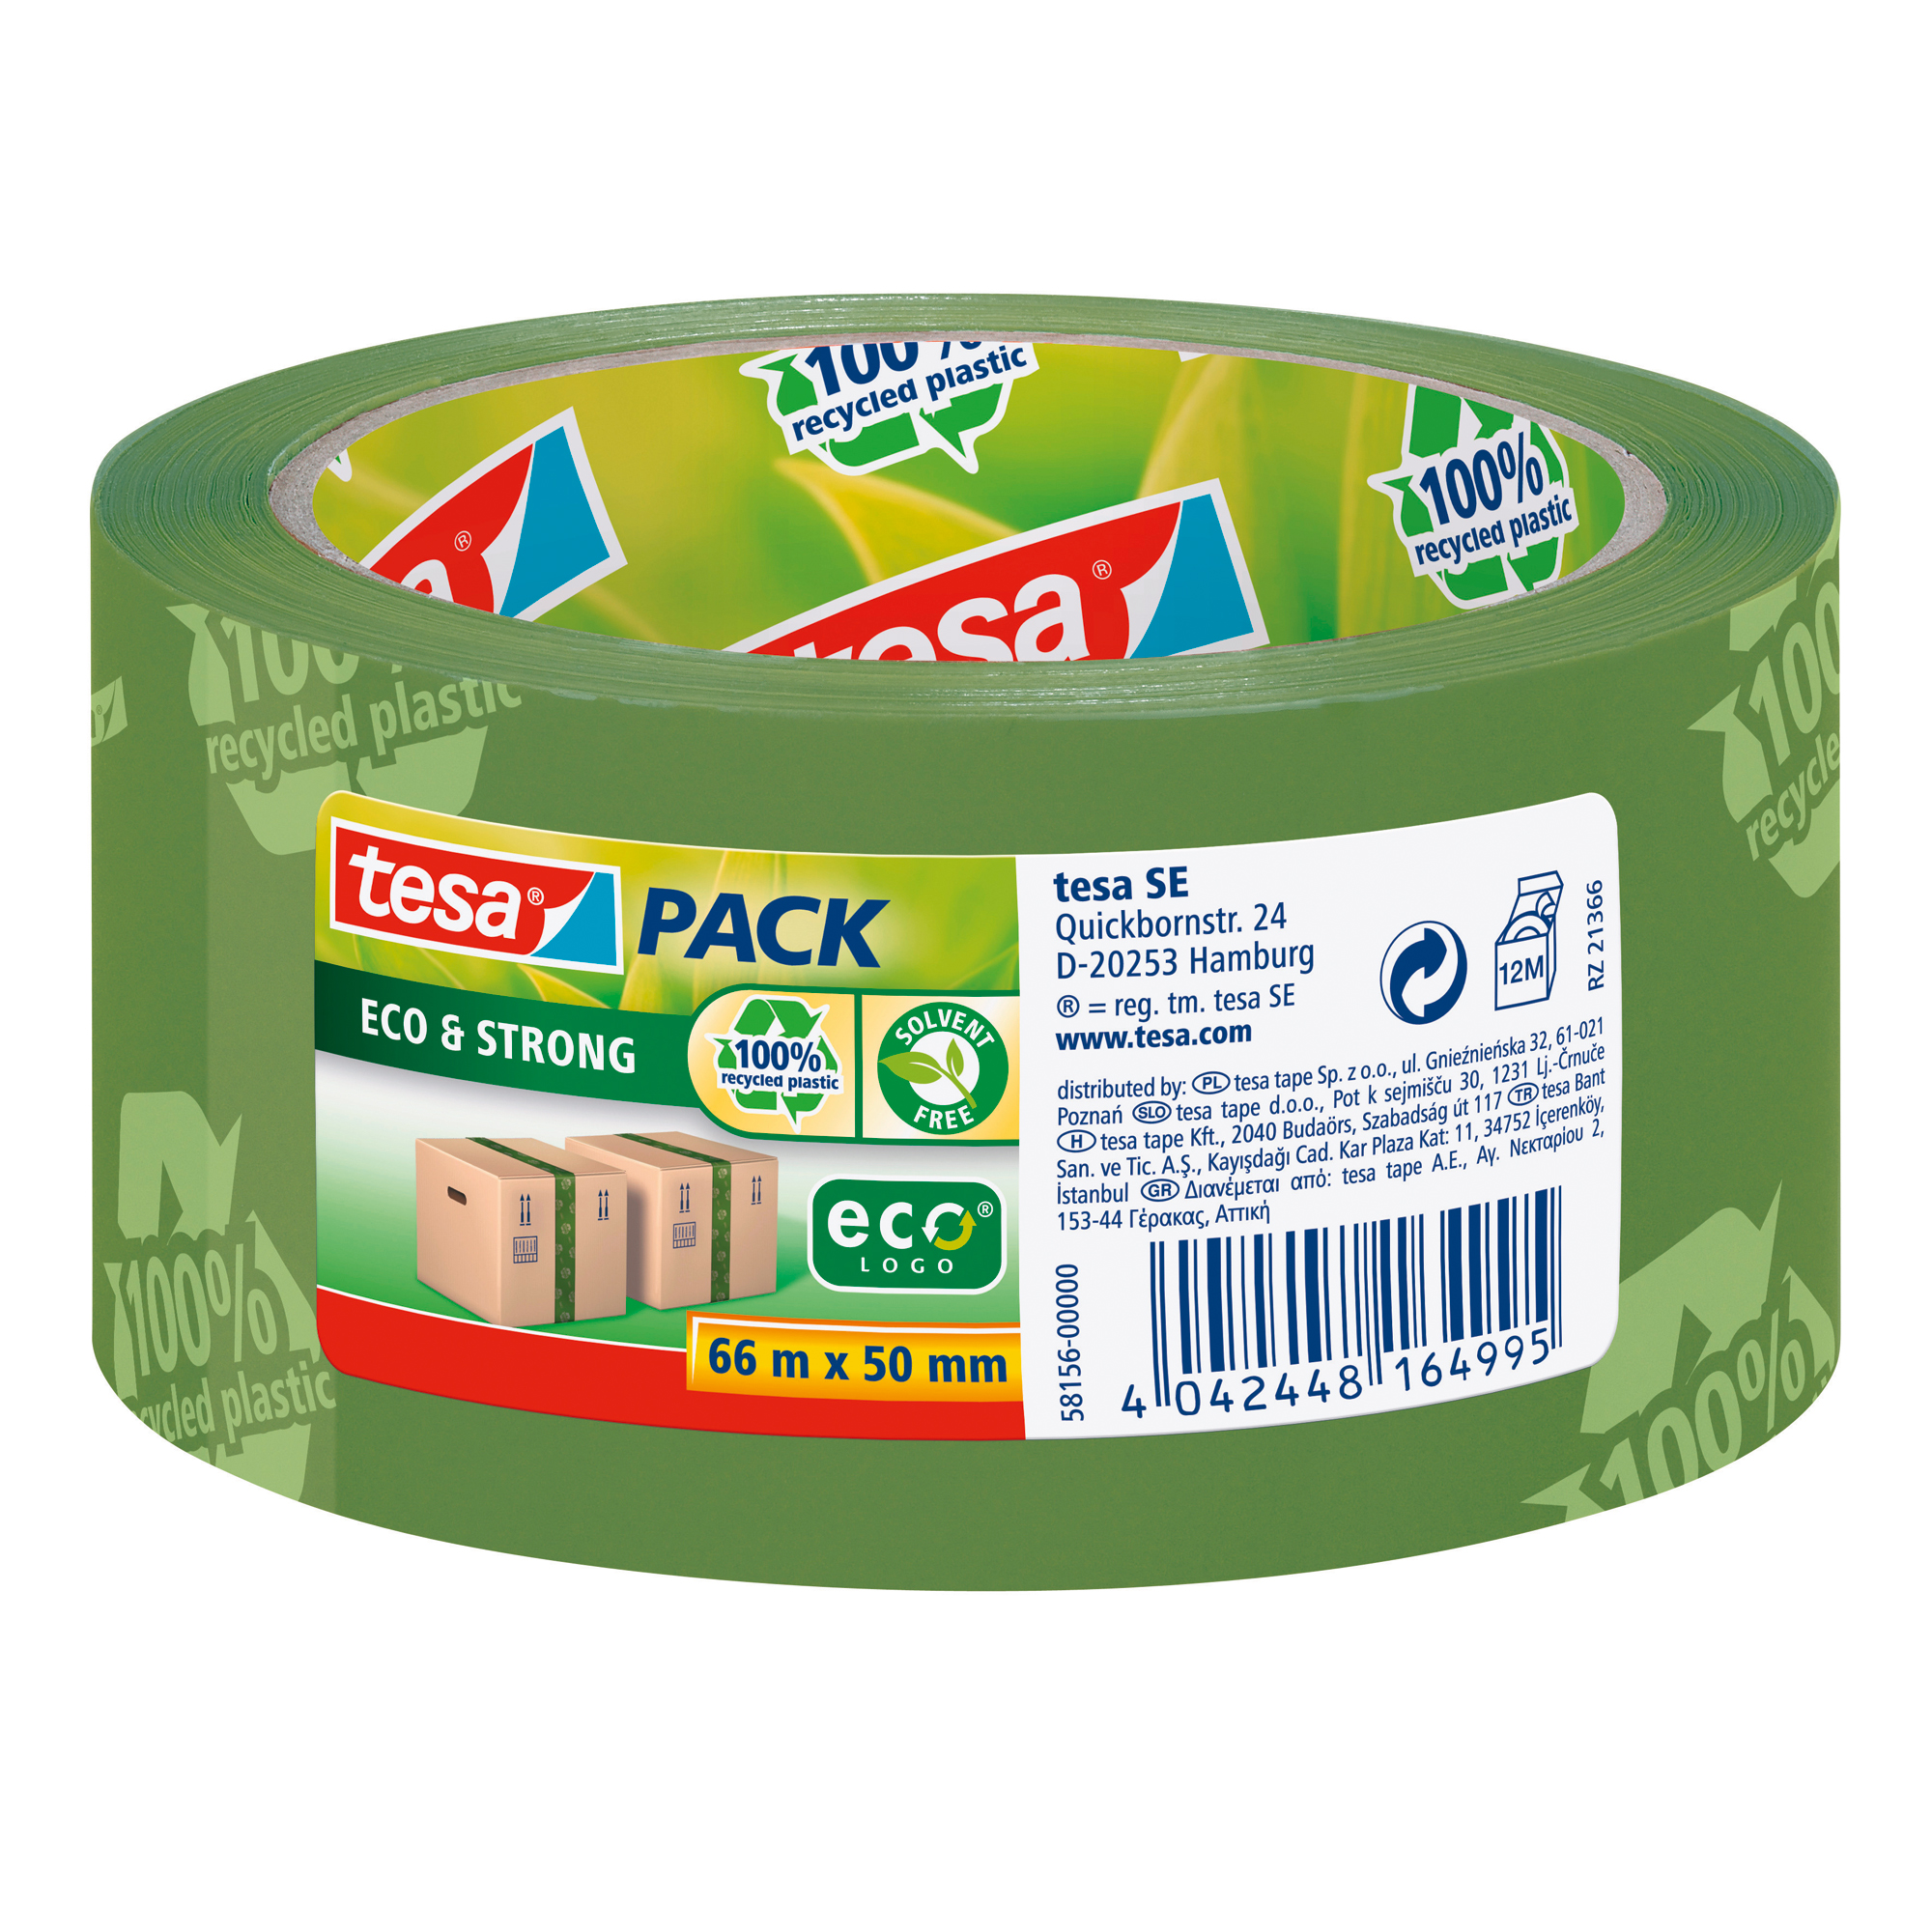 tesa® Packband tesapack® Eco & Strong mit Aufdruck grün